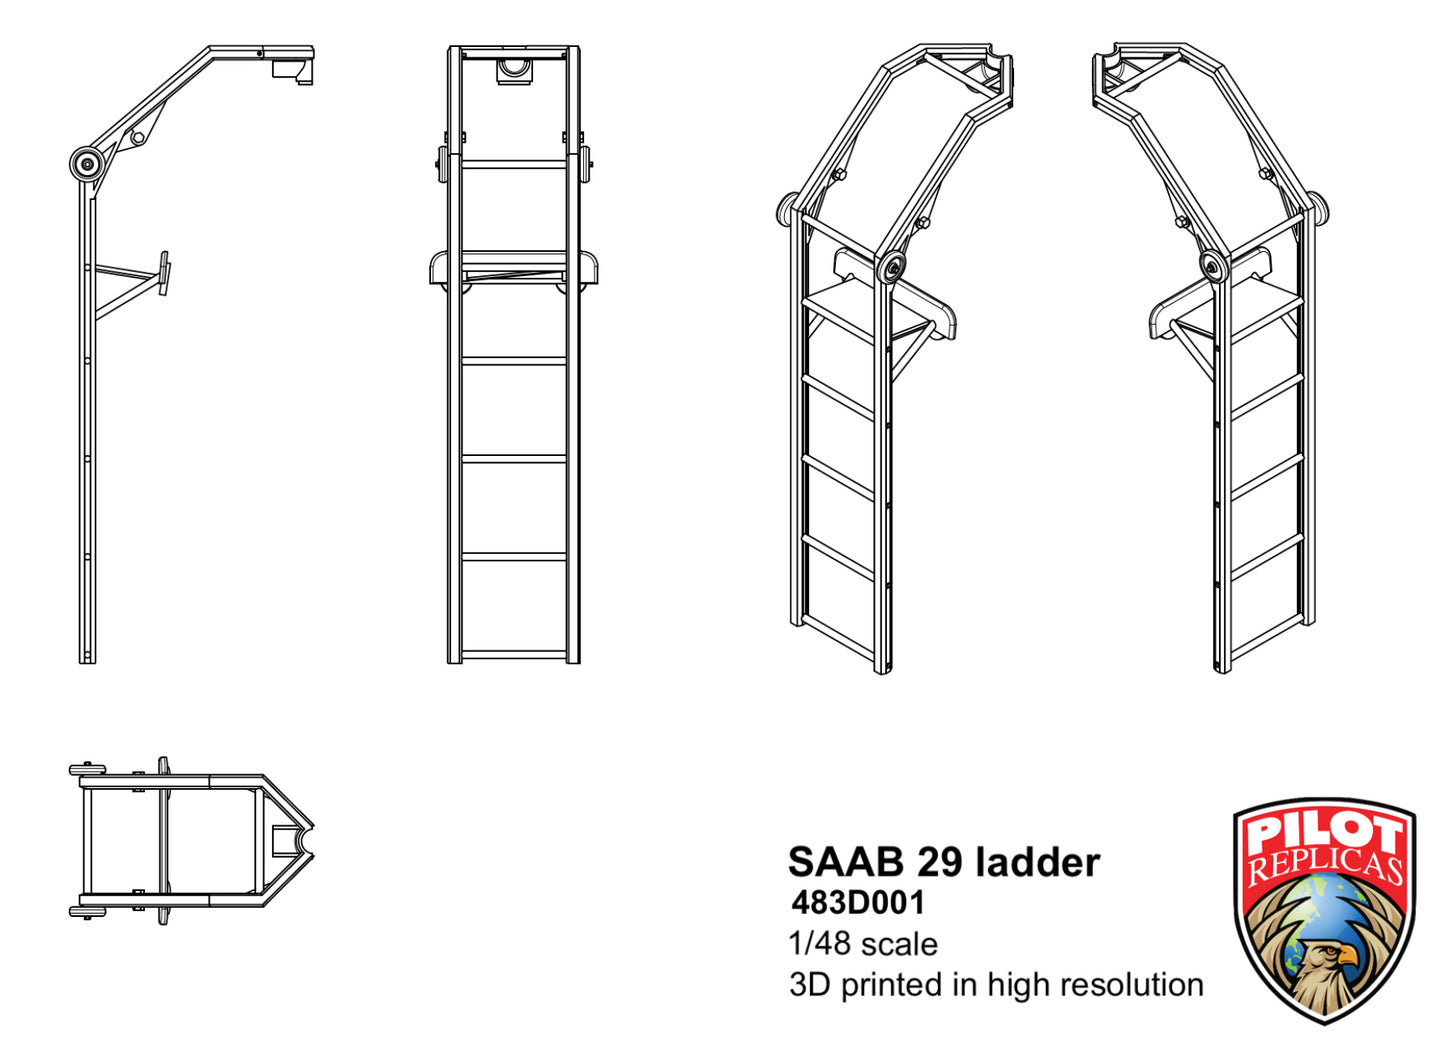 1/48 scale SAAB 29 ladder 483D001